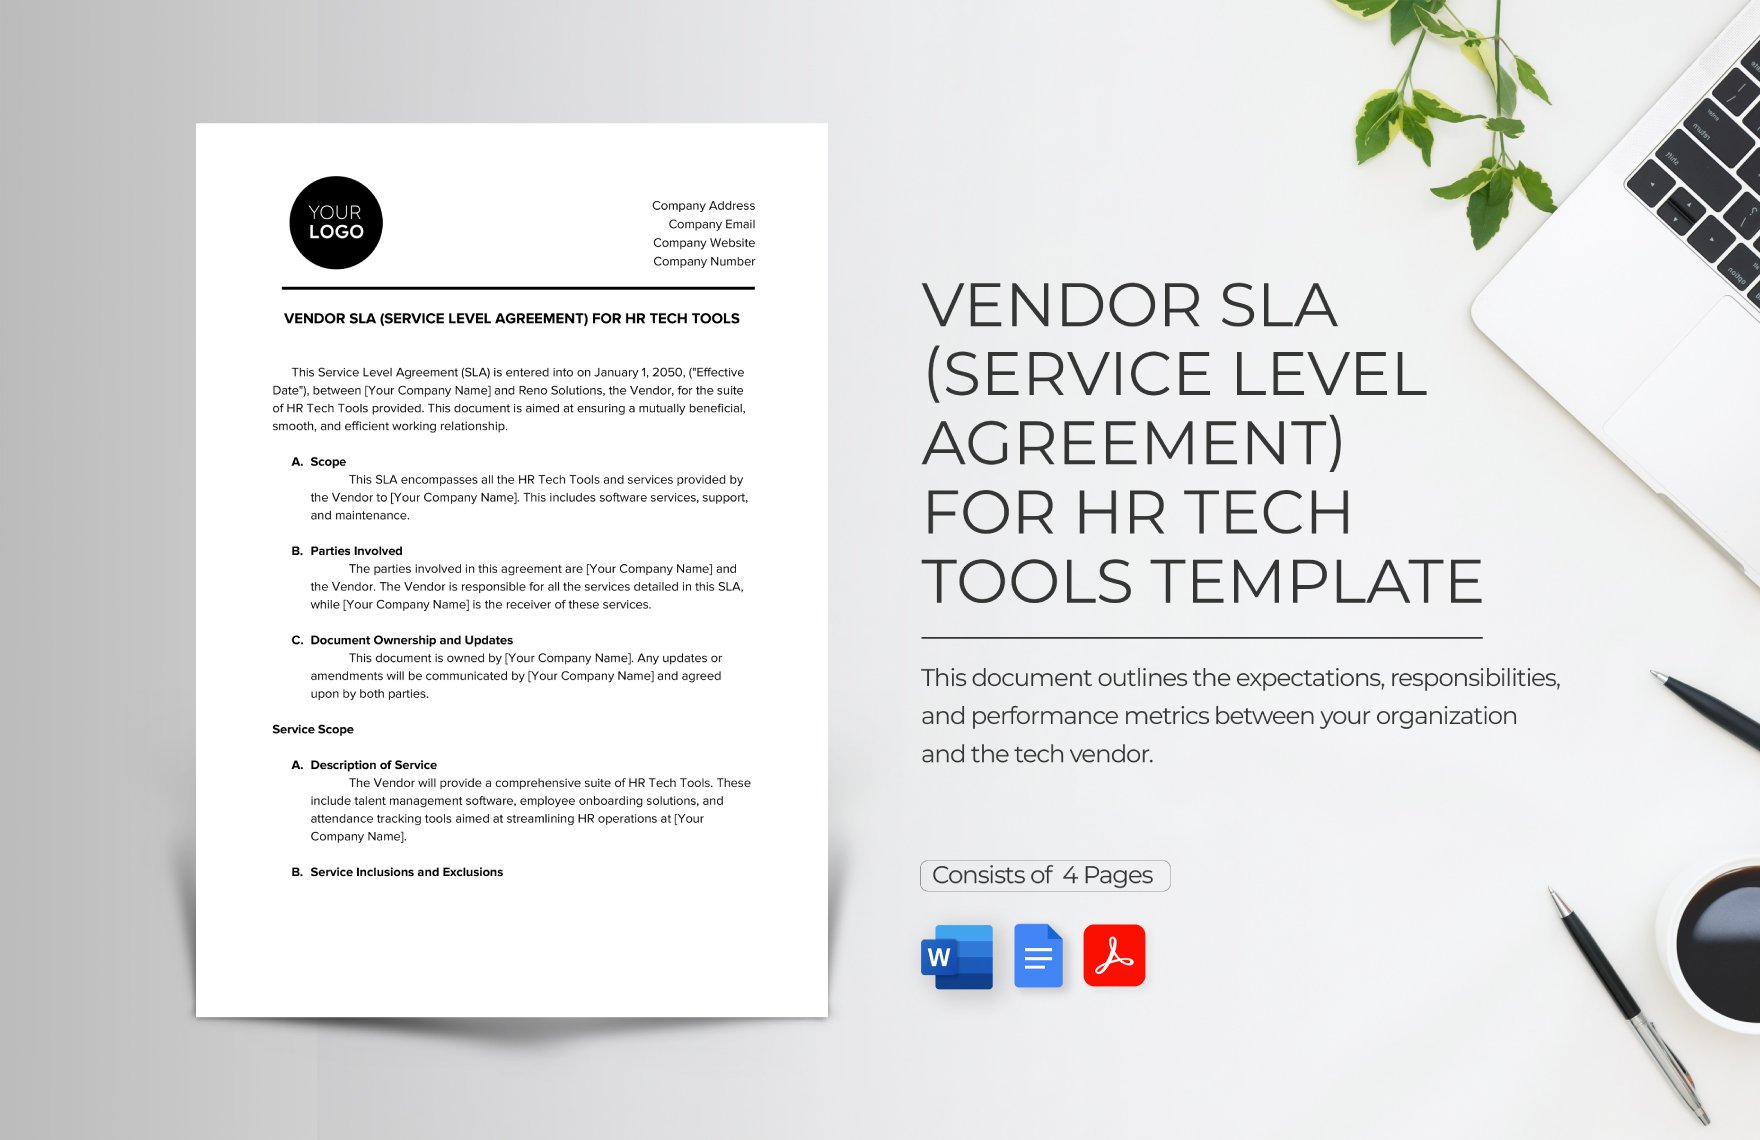 Vendor SLA (Service Level Agreement) for HR Tech Tools Template in Word, Google Docs, PDF